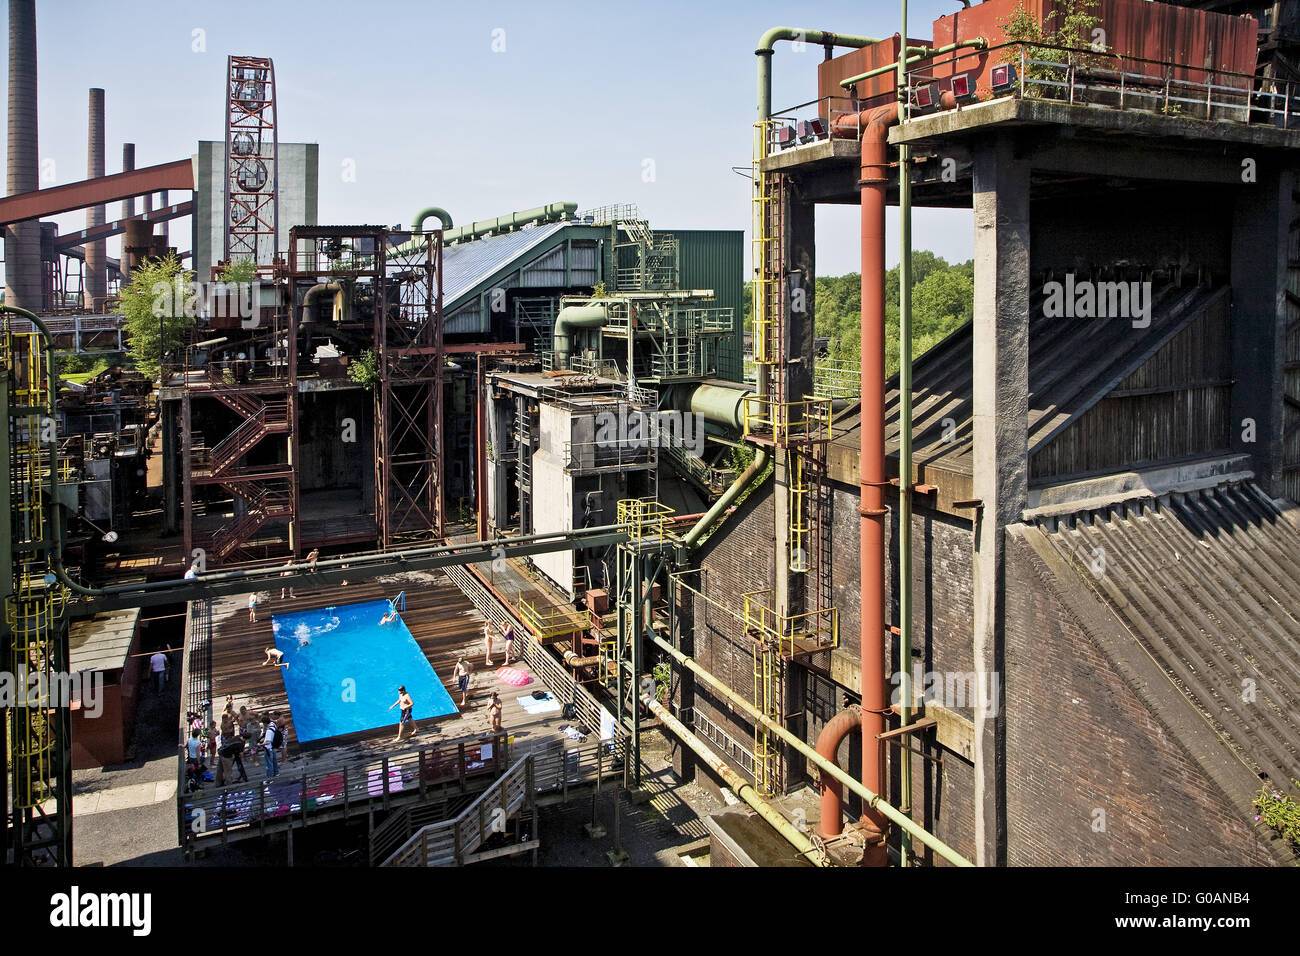 Factory swimming pool, Zollverein, Essen, Germany Stock Photo